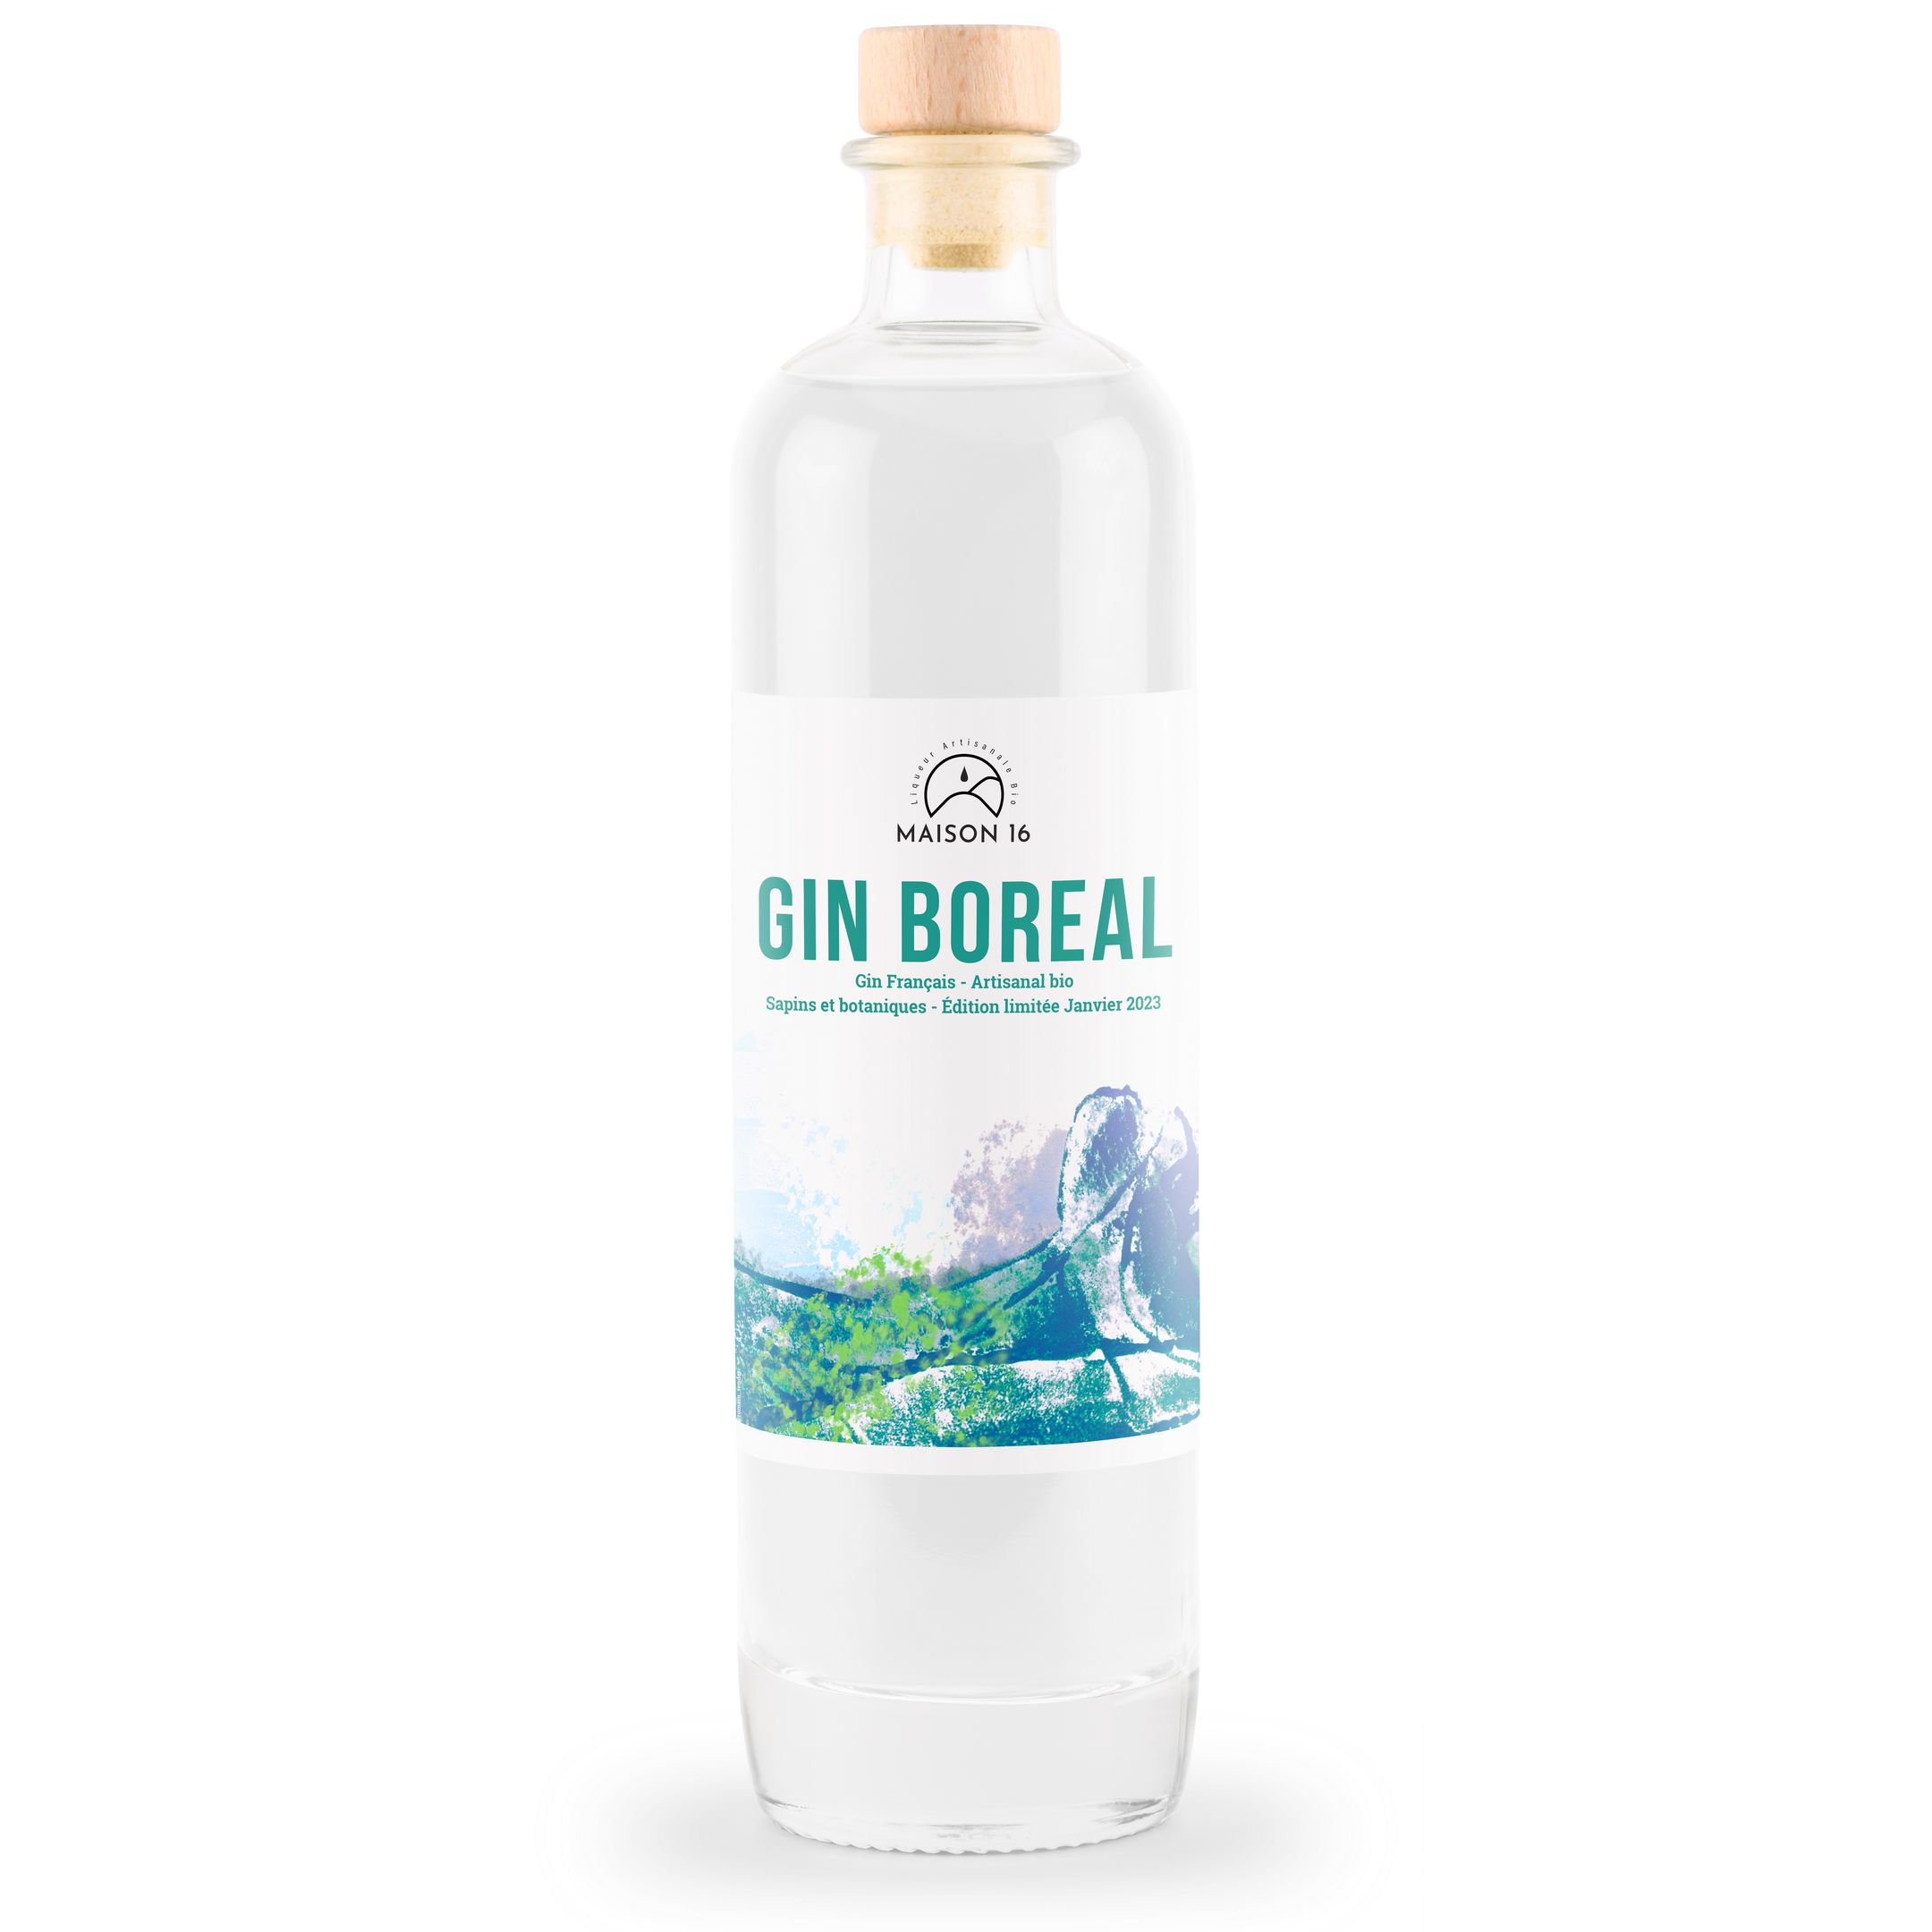 Gin Boréal – Maison 16